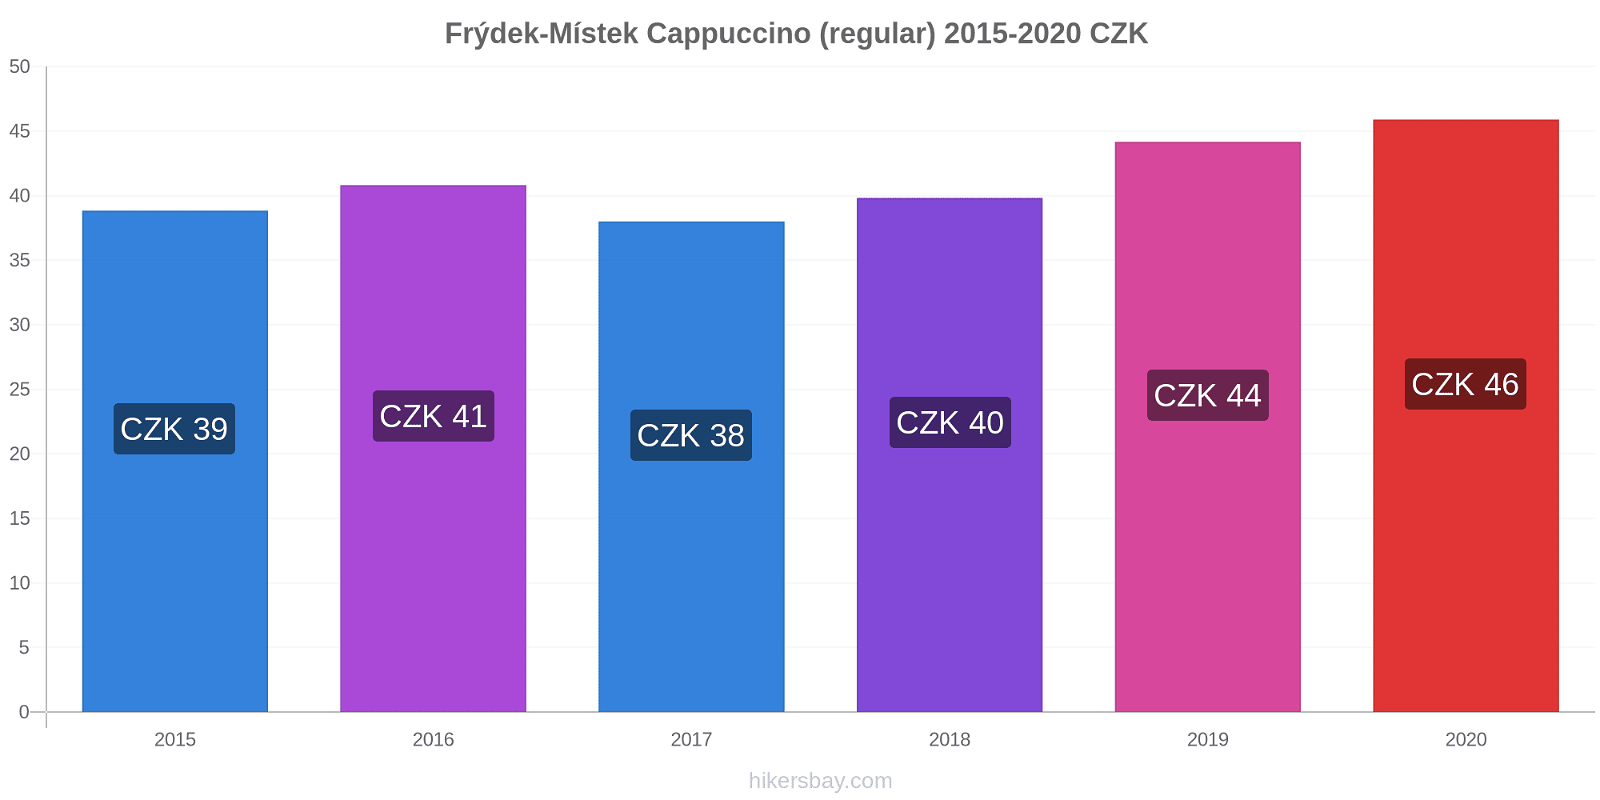 Frýdek-Místek price changes Cappuccino (regular) hikersbay.com